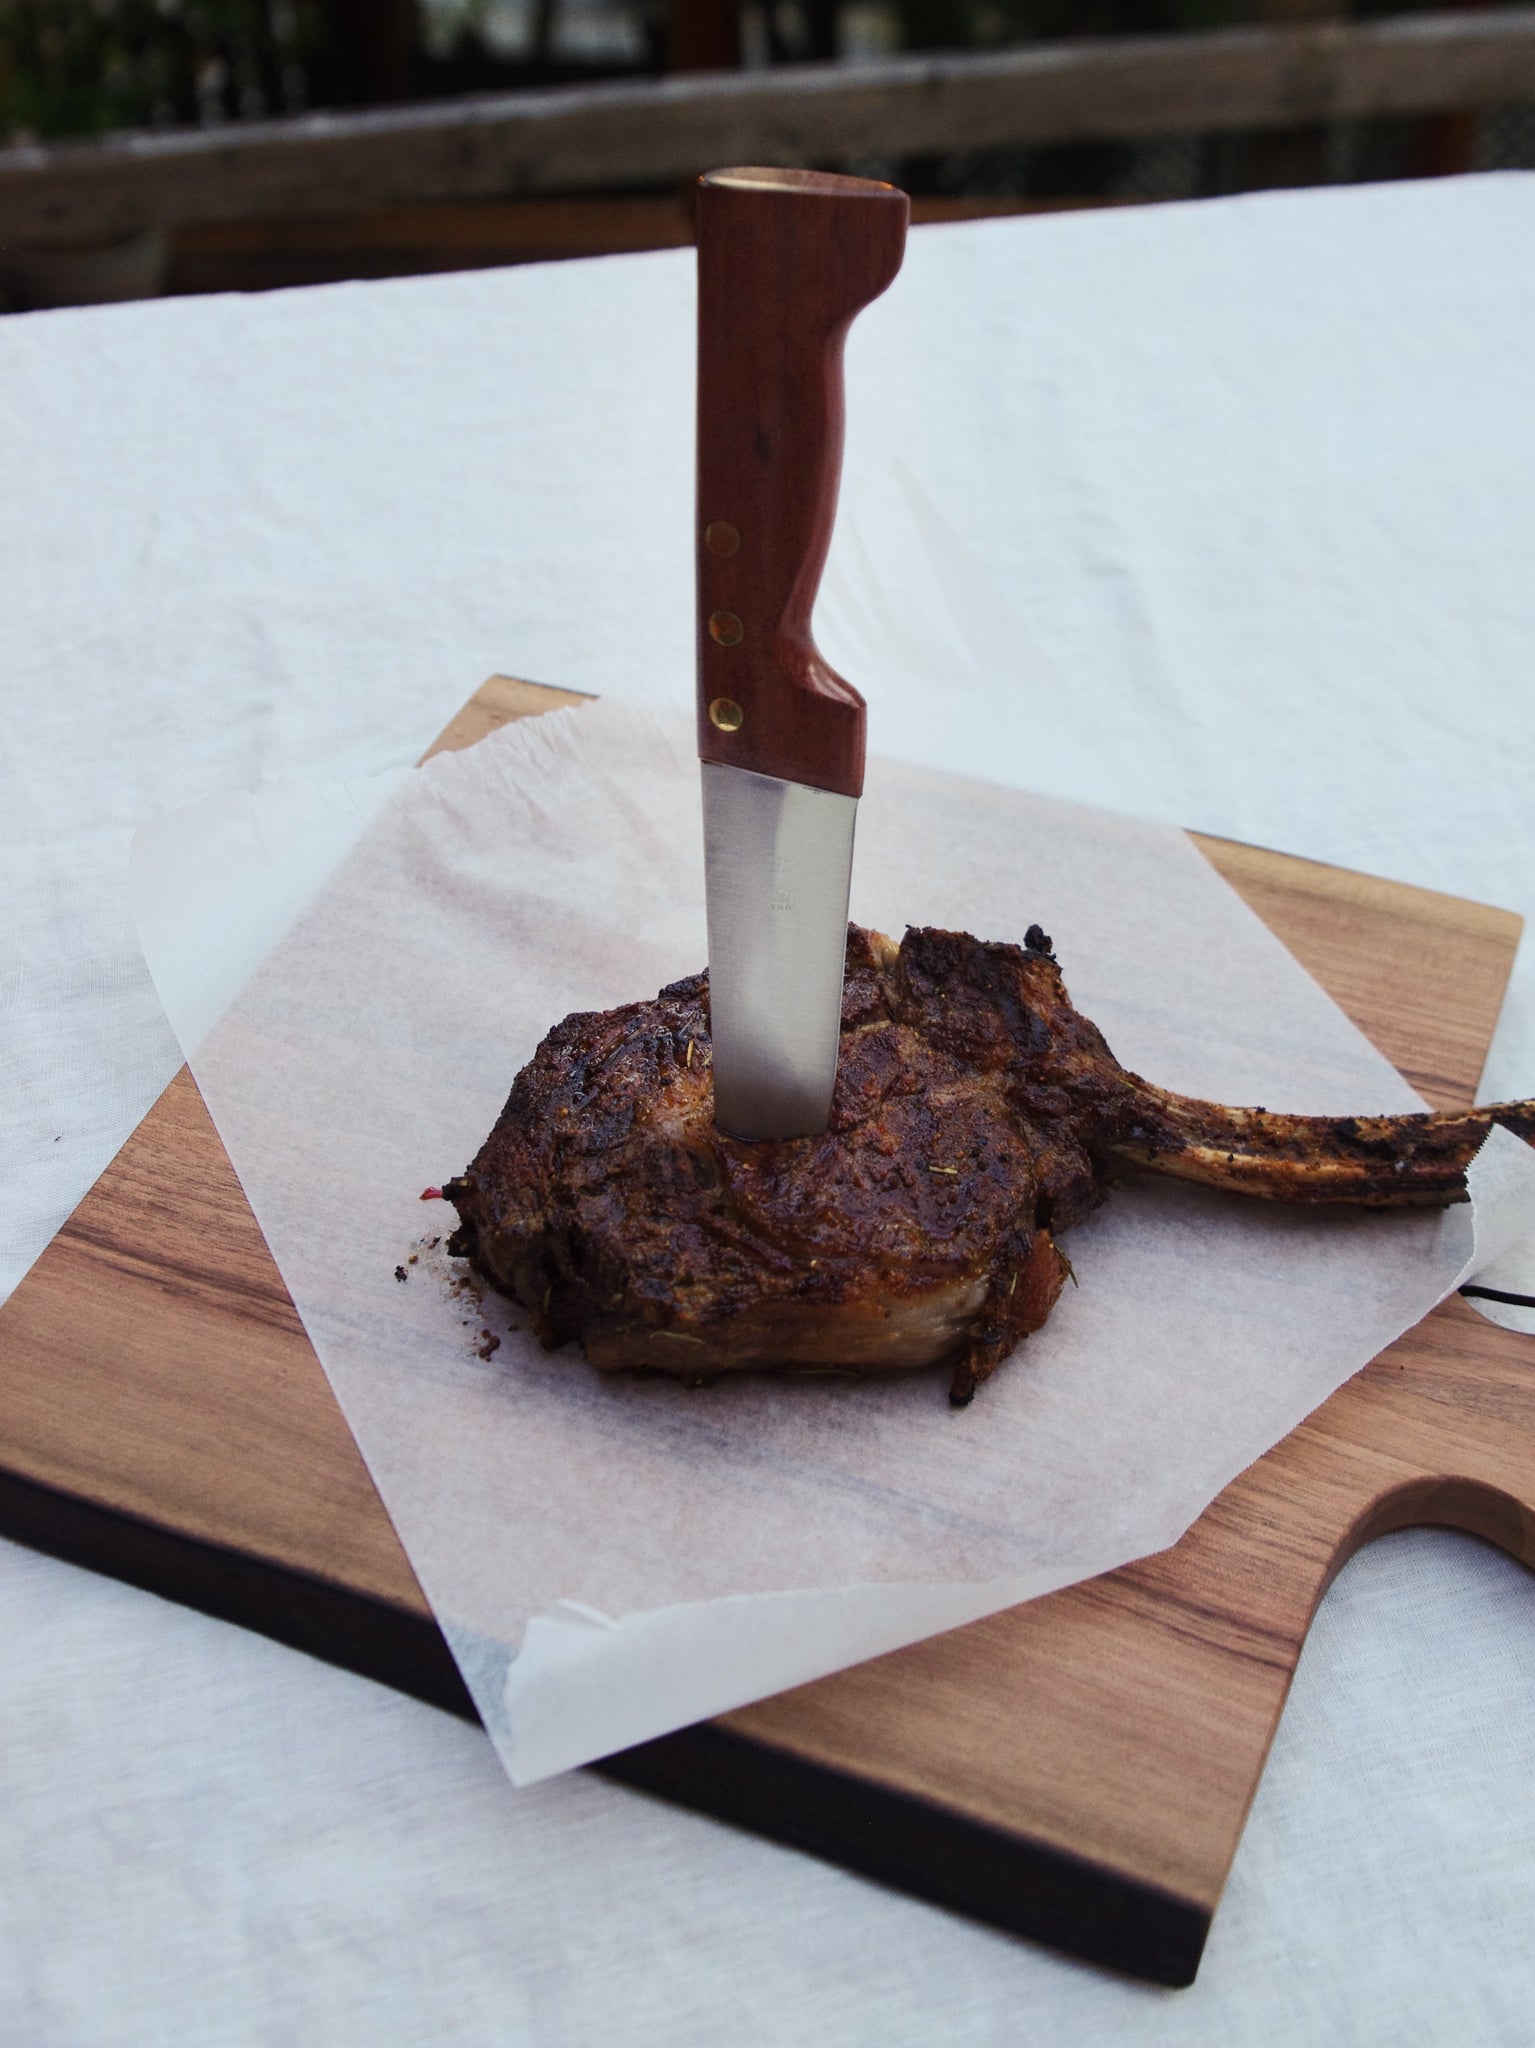 Set of 4 Au Nain Rosewood Steak Knives—Extra Large